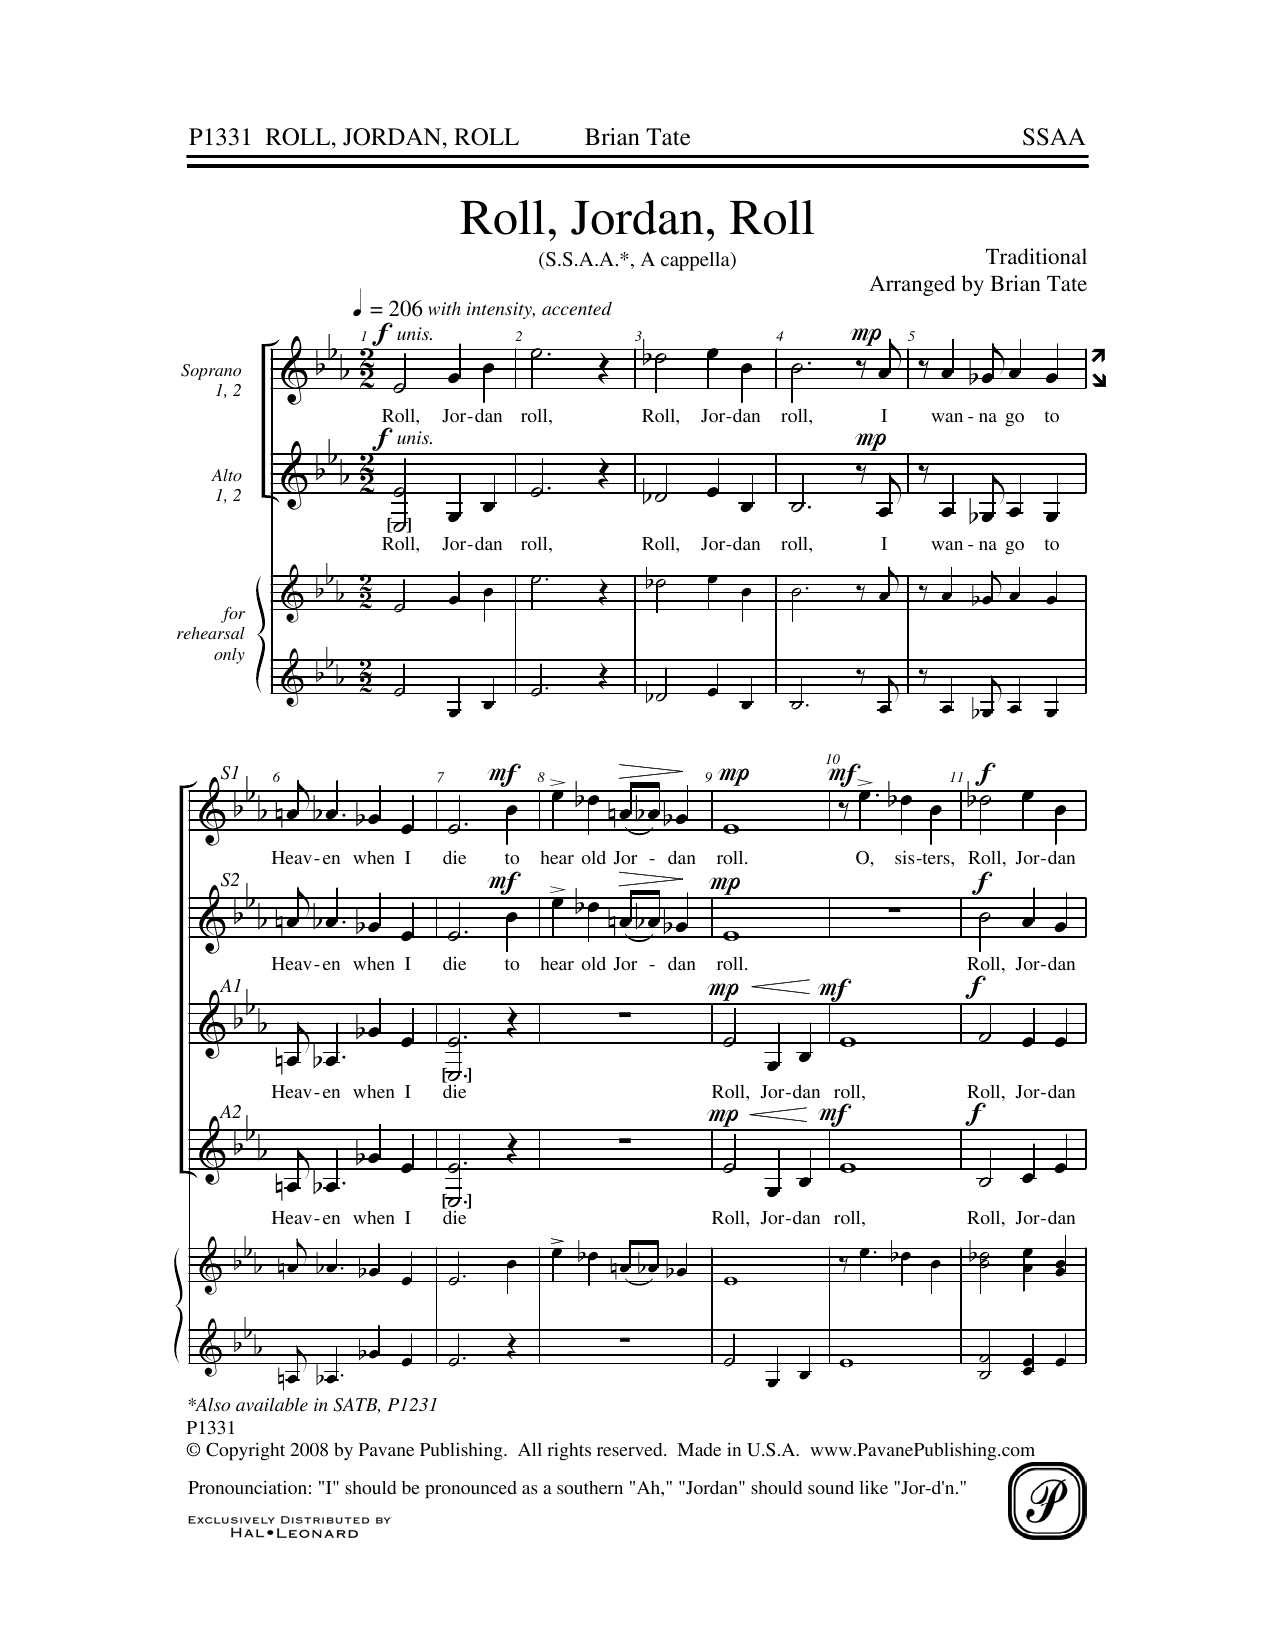 Brian Tate Roll, Jordan, Roll Sheet Music Notes & Chords for SSA Choir - Download or Print PDF